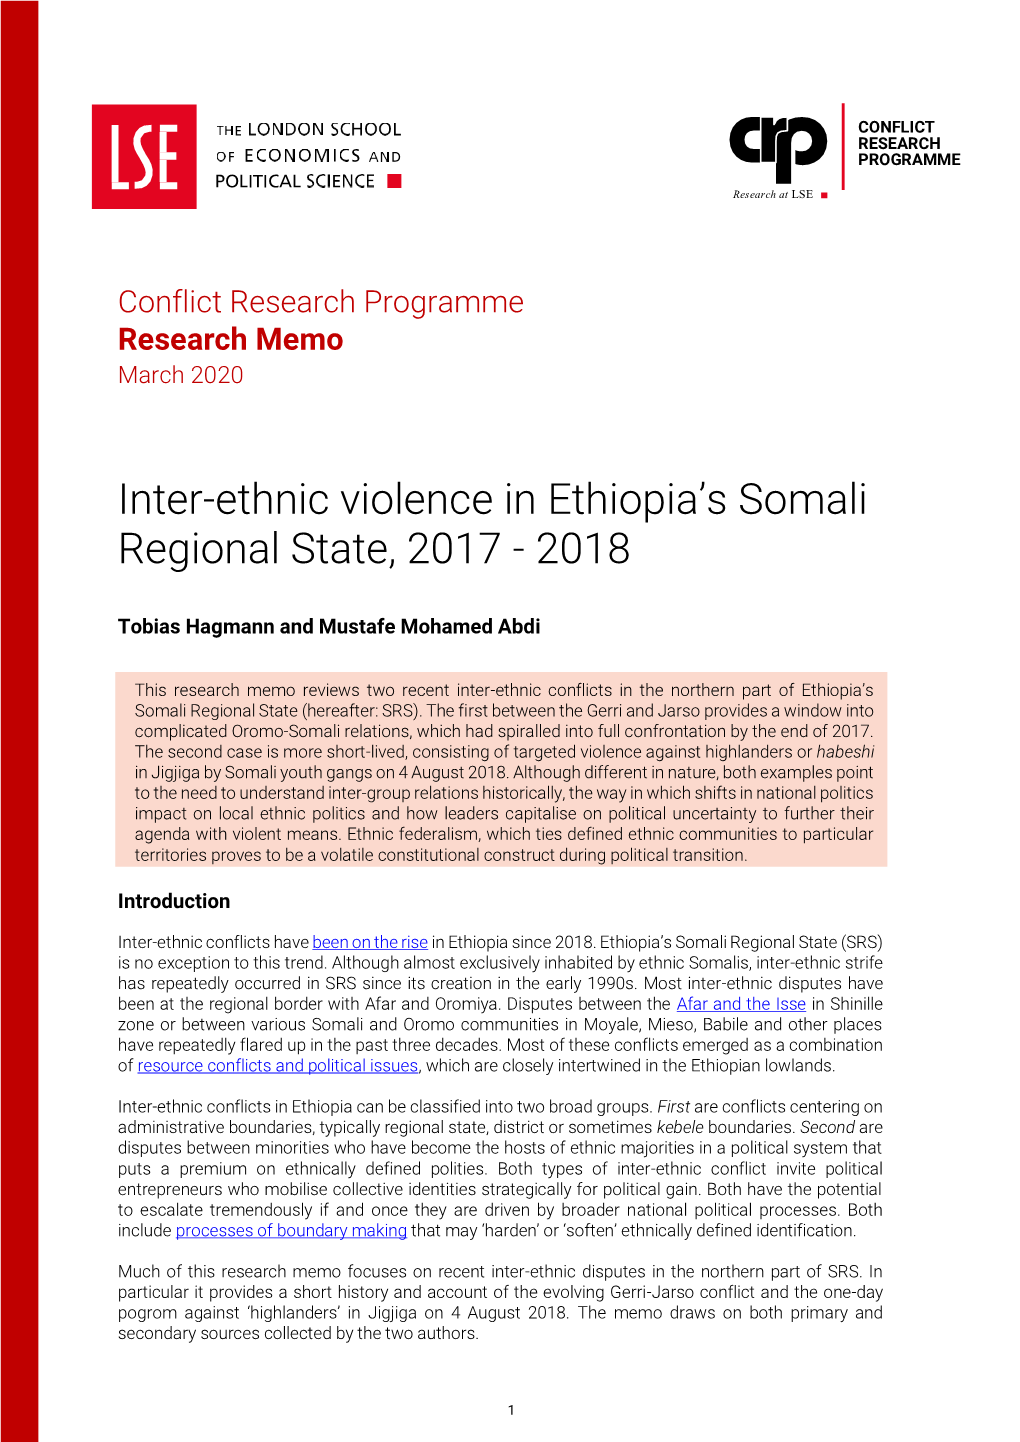 Inter-Ethnic Violence in Ethiopia's Somali Regional State, 2017